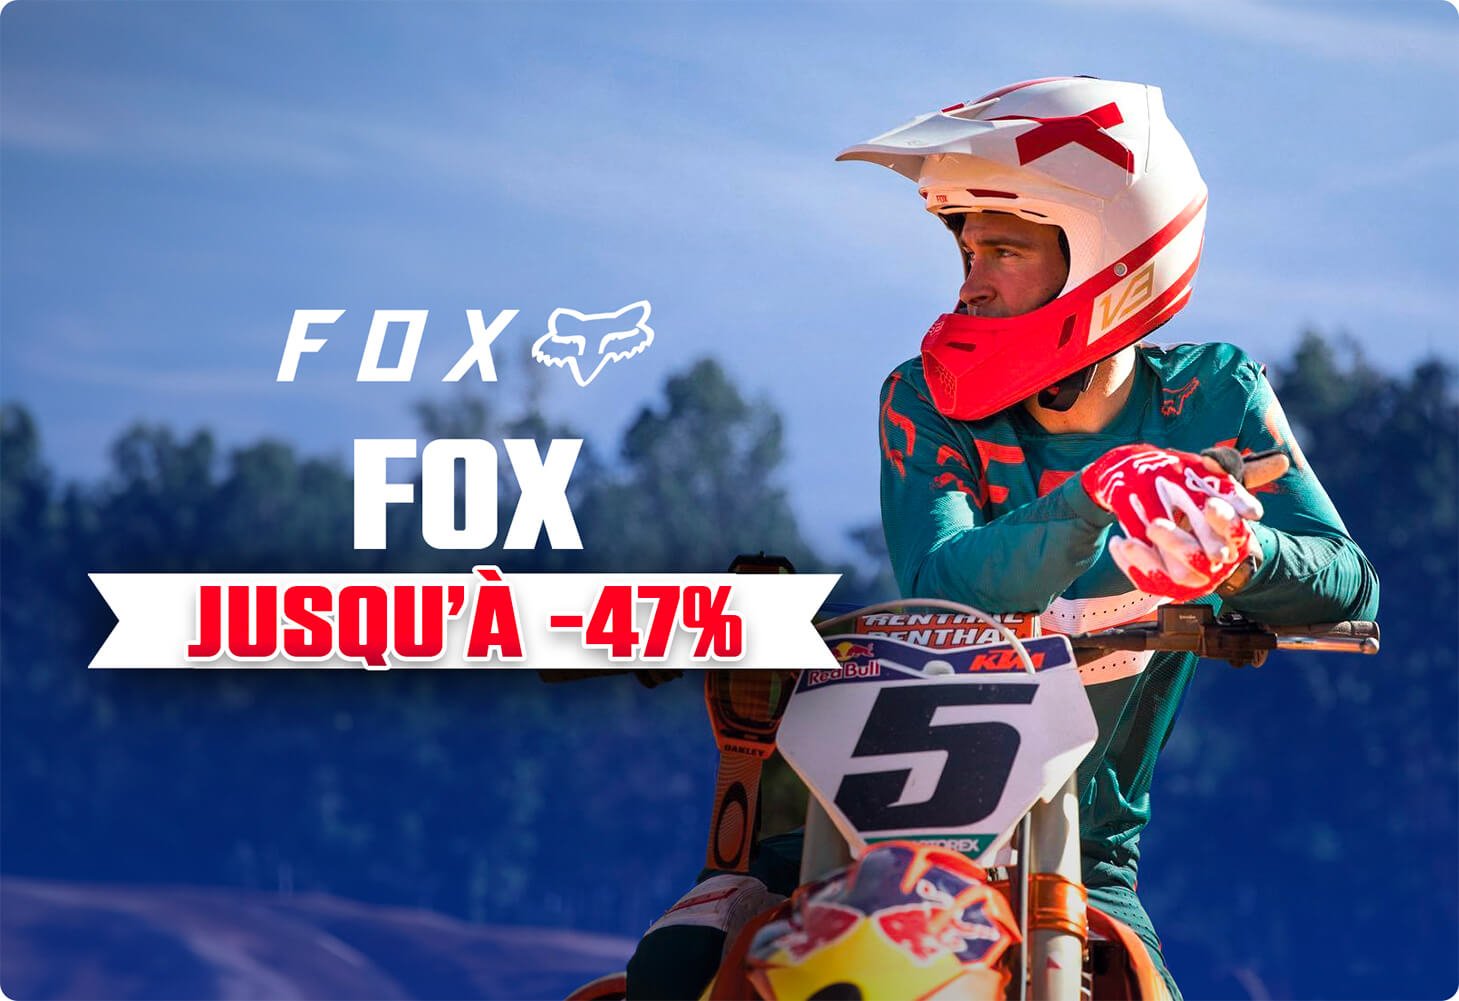 Fox jusqu' -47%